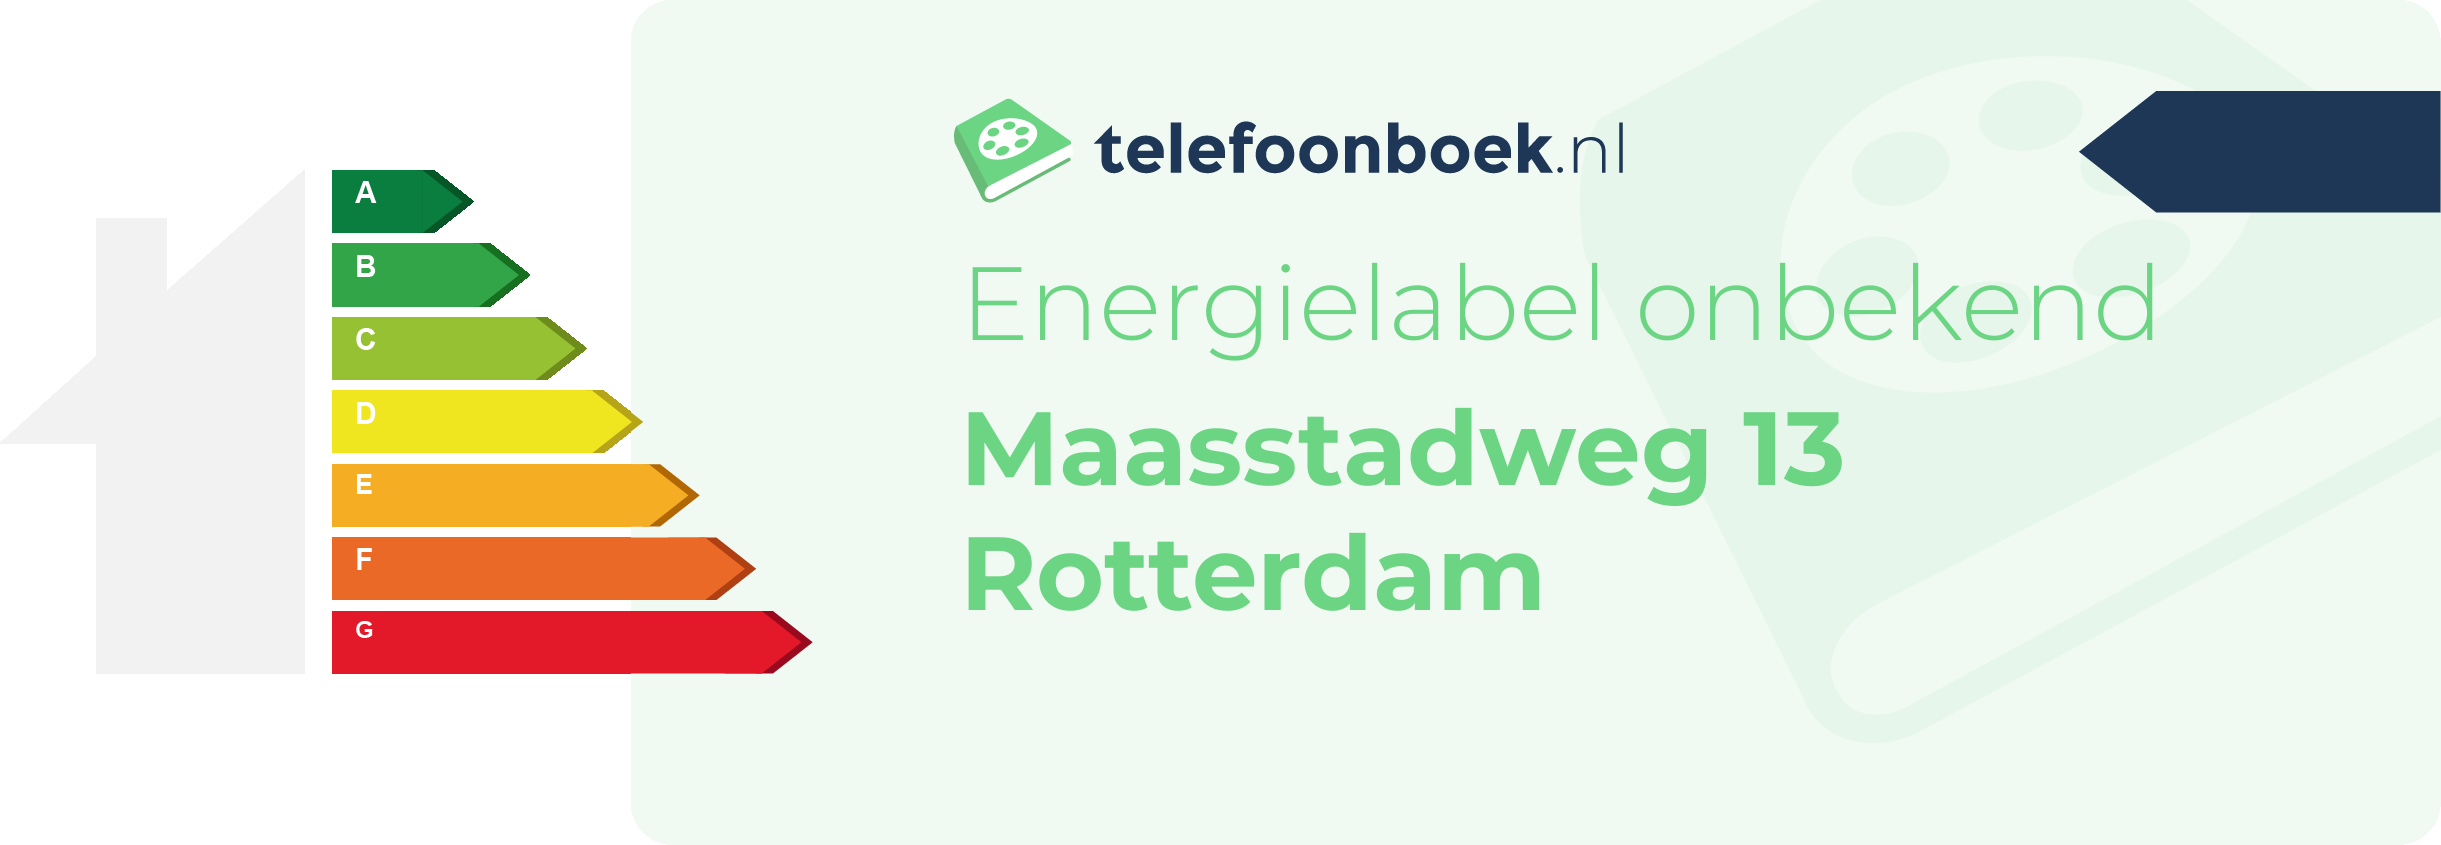 Energielabel Maasstadweg 13 Rotterdam